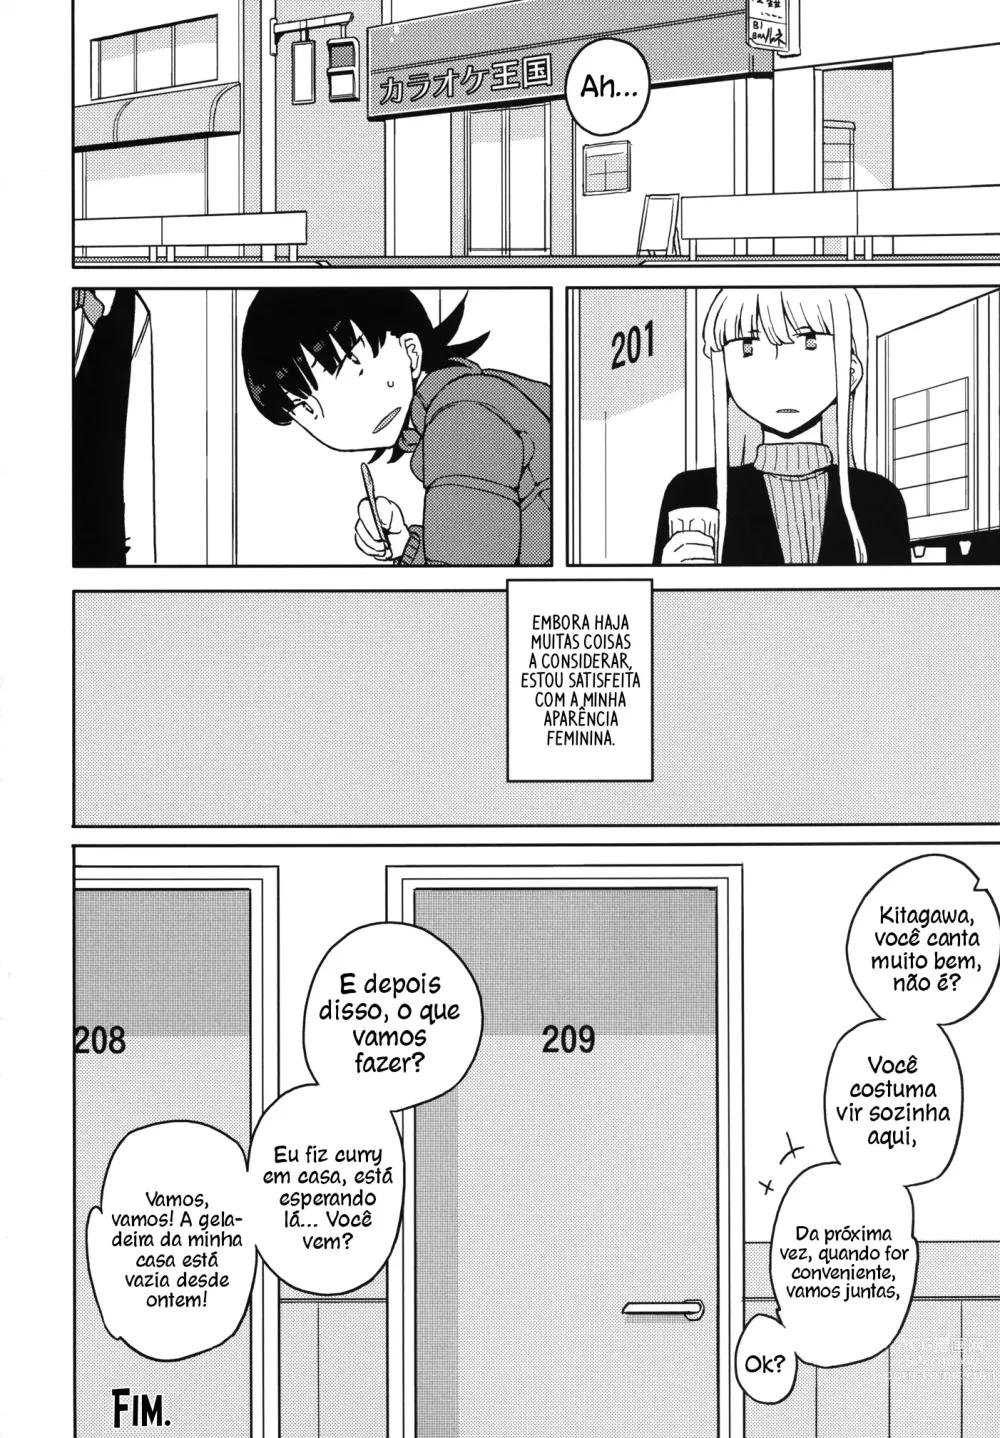 Page 42 of doujinshi TS: Quando Ele se tornou Ela